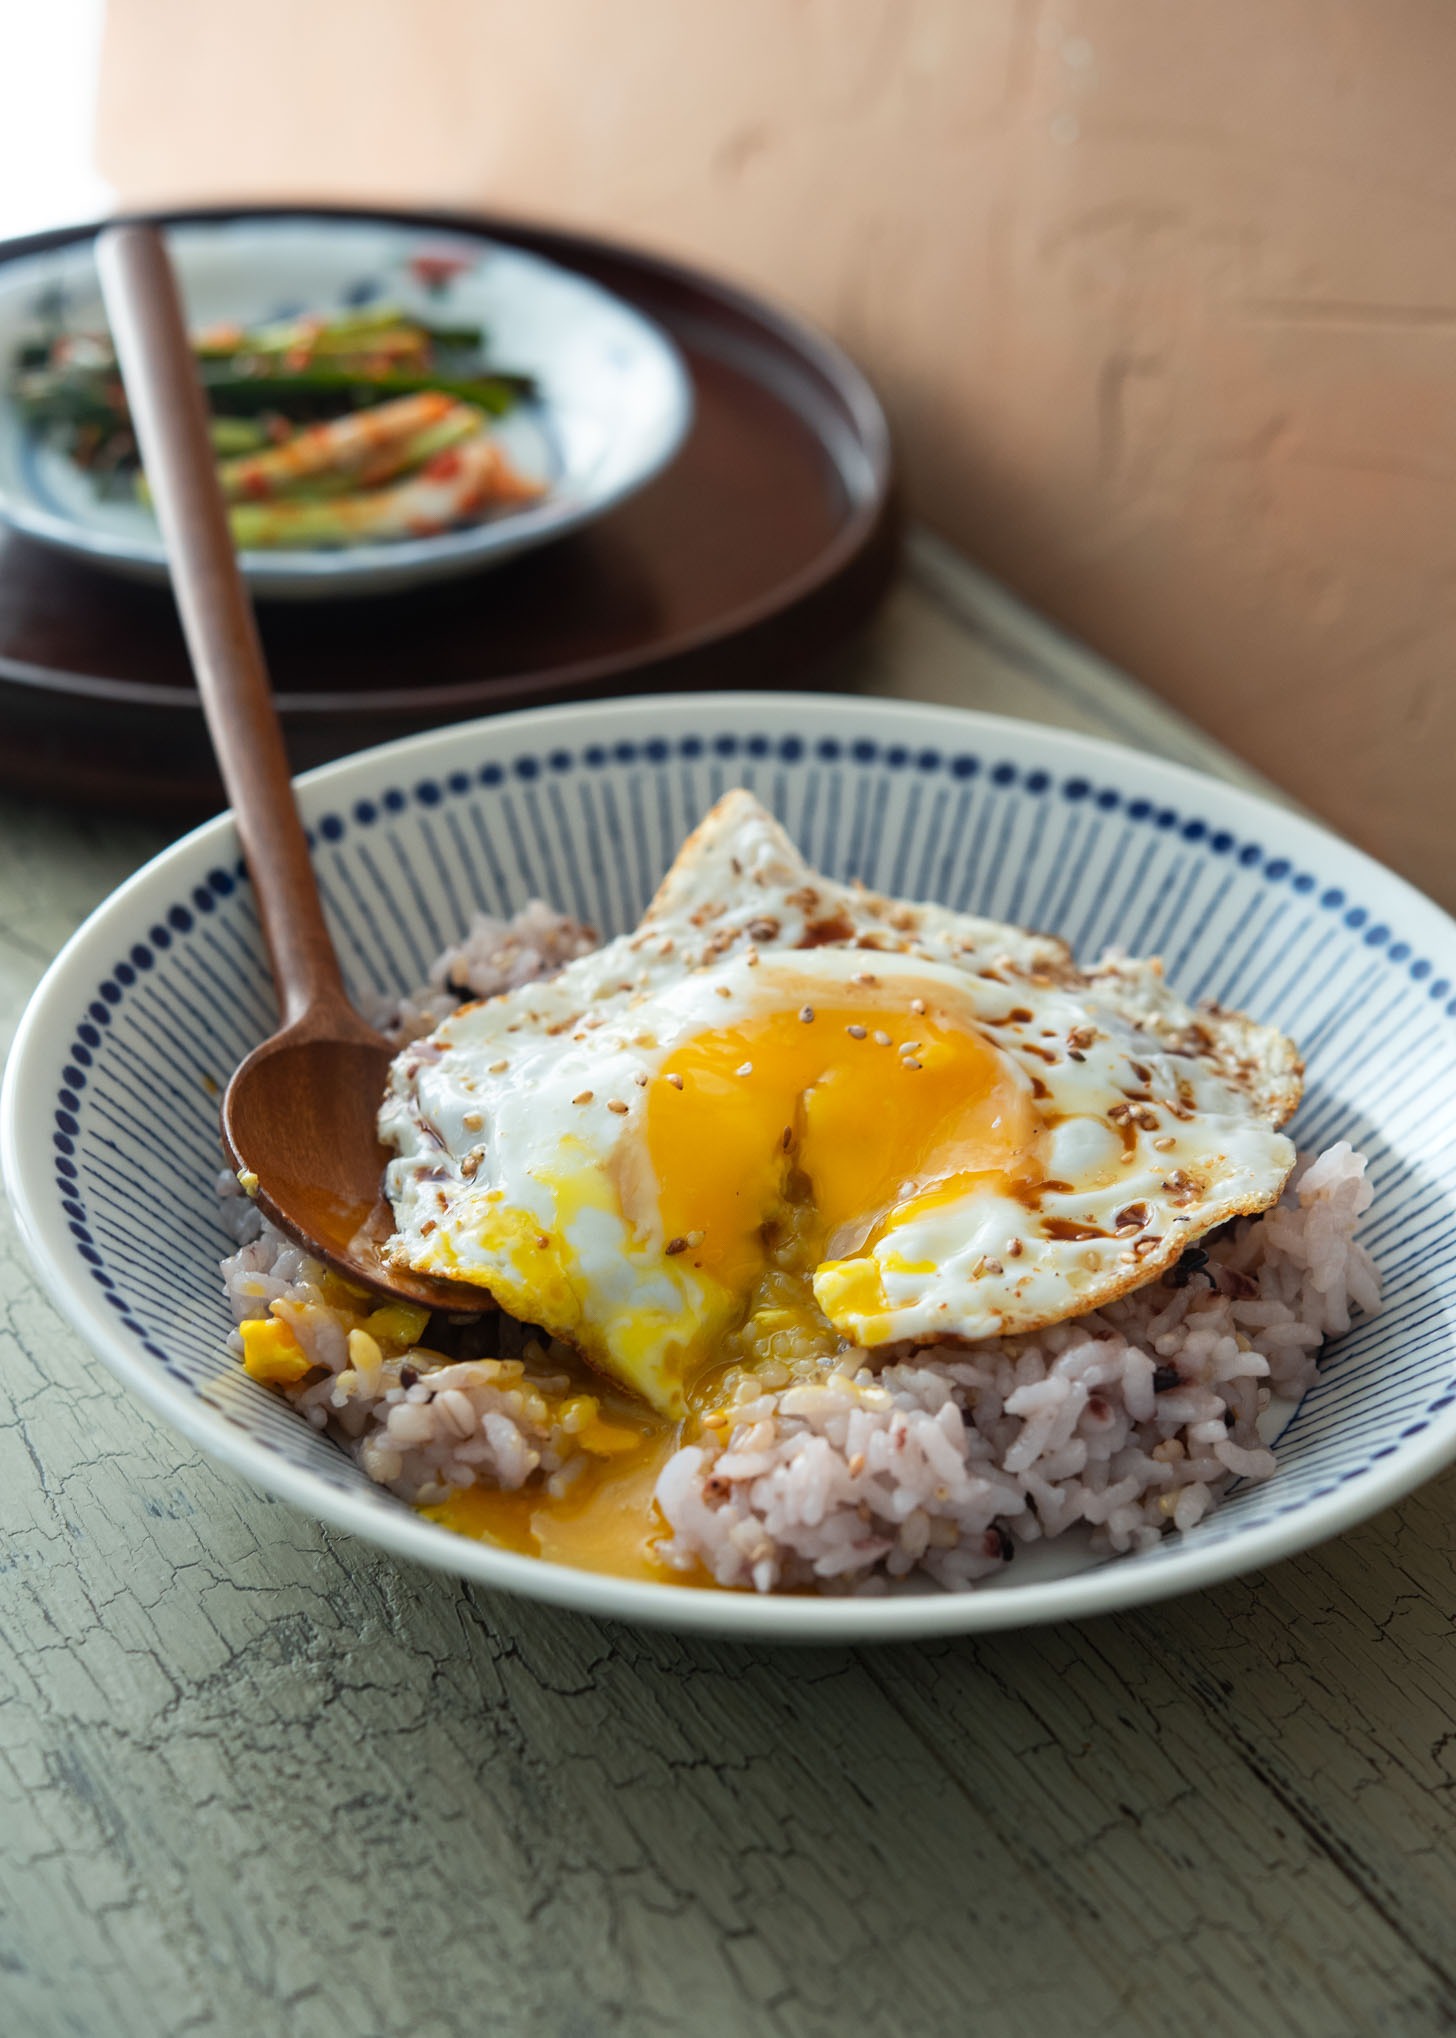 Golden egg yolk running down from Korean gyeran bap, rice with fried egg.